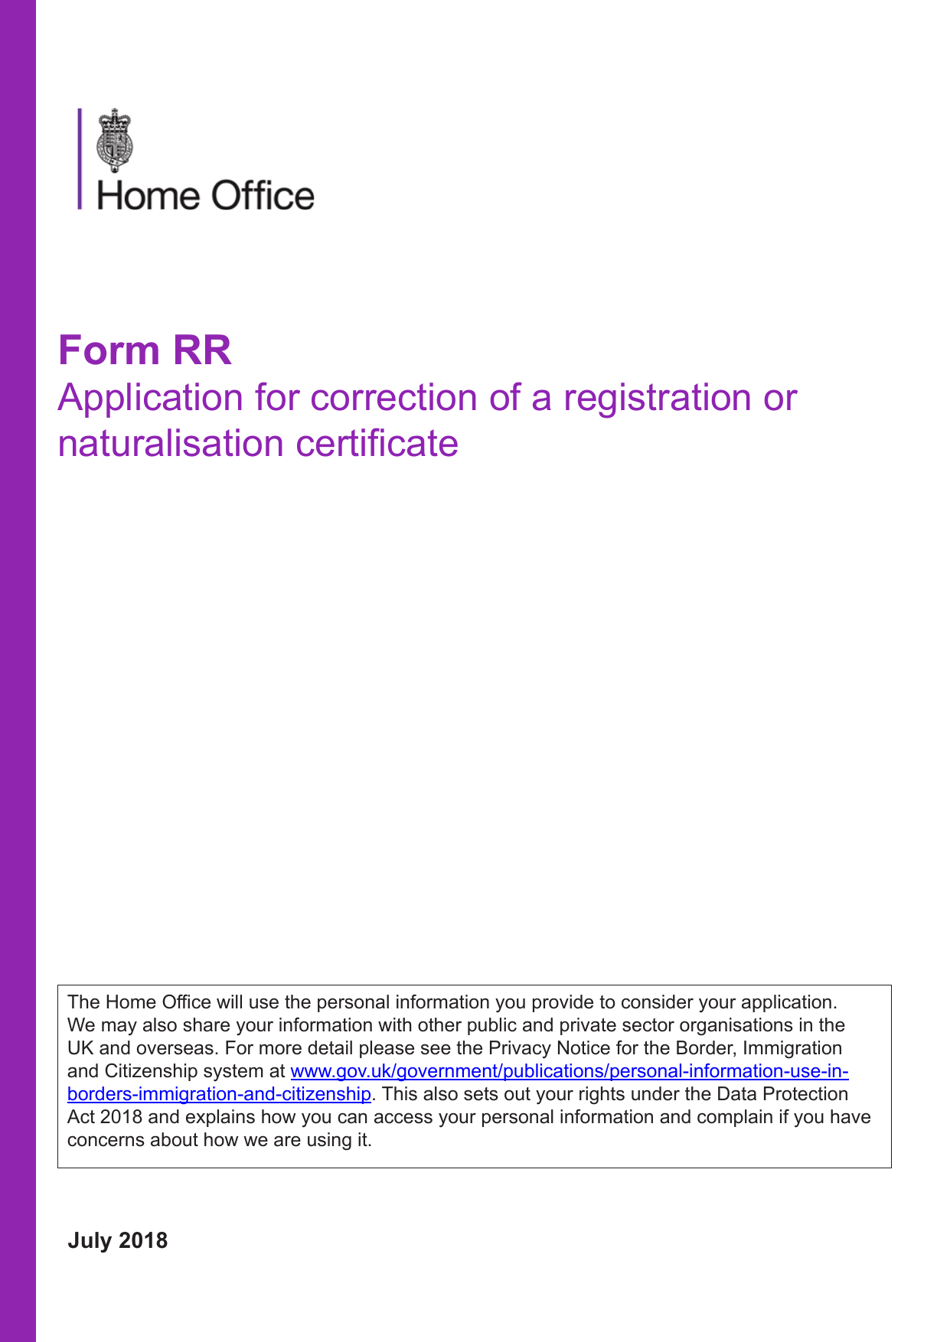 Form RR Application for Correction of a Registration or Naturalisation Certificate - United Kingdom, Page 1